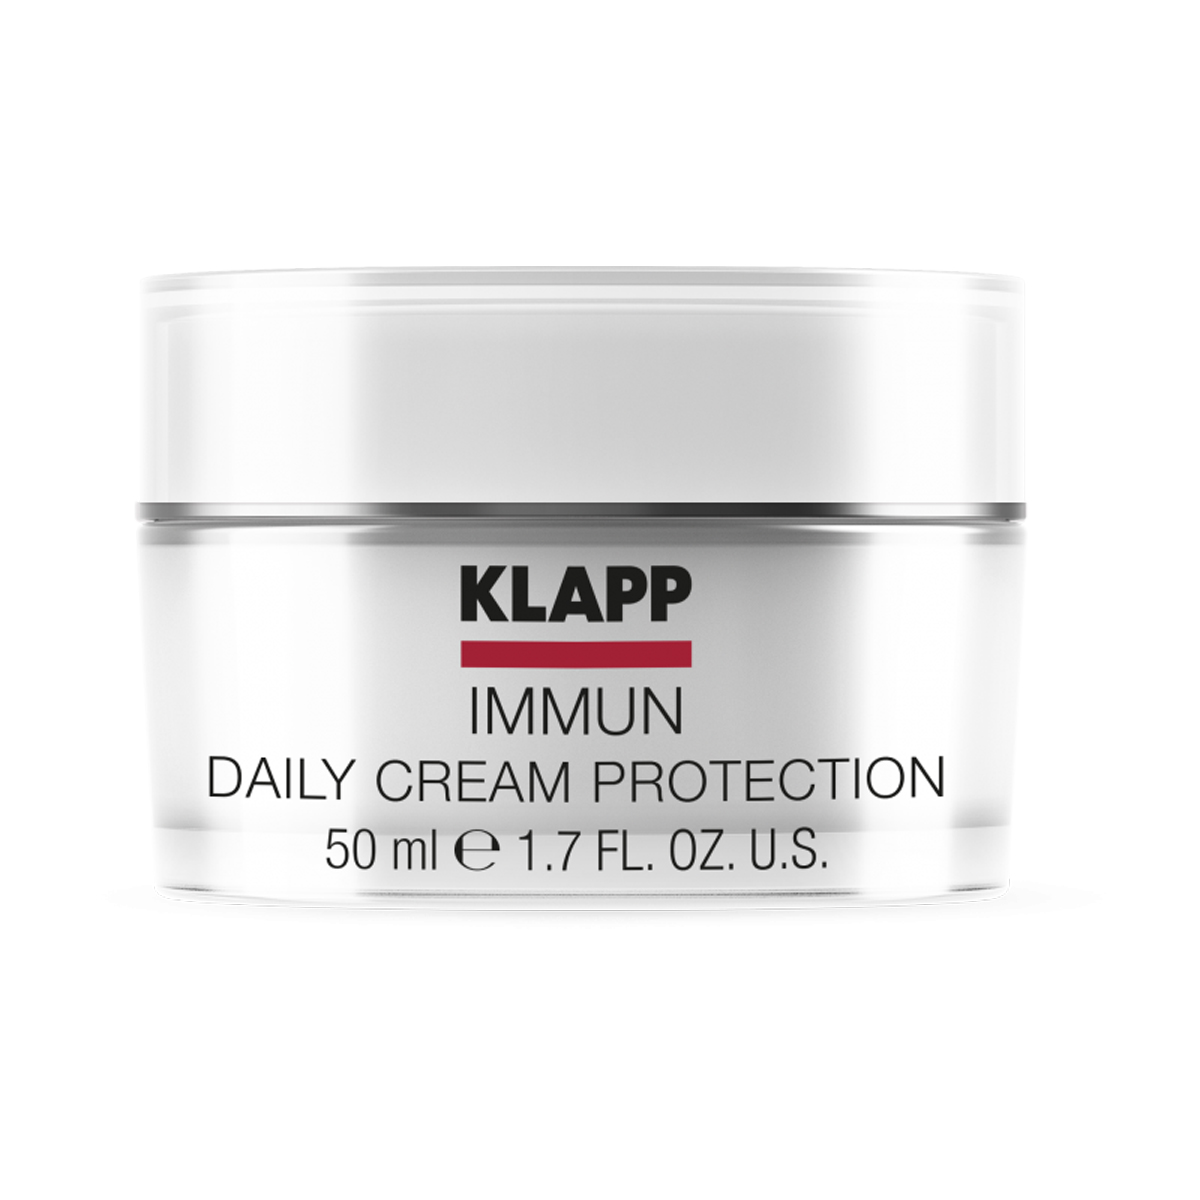 KLAPP Immun Daily Cream Protection 50 ml Day